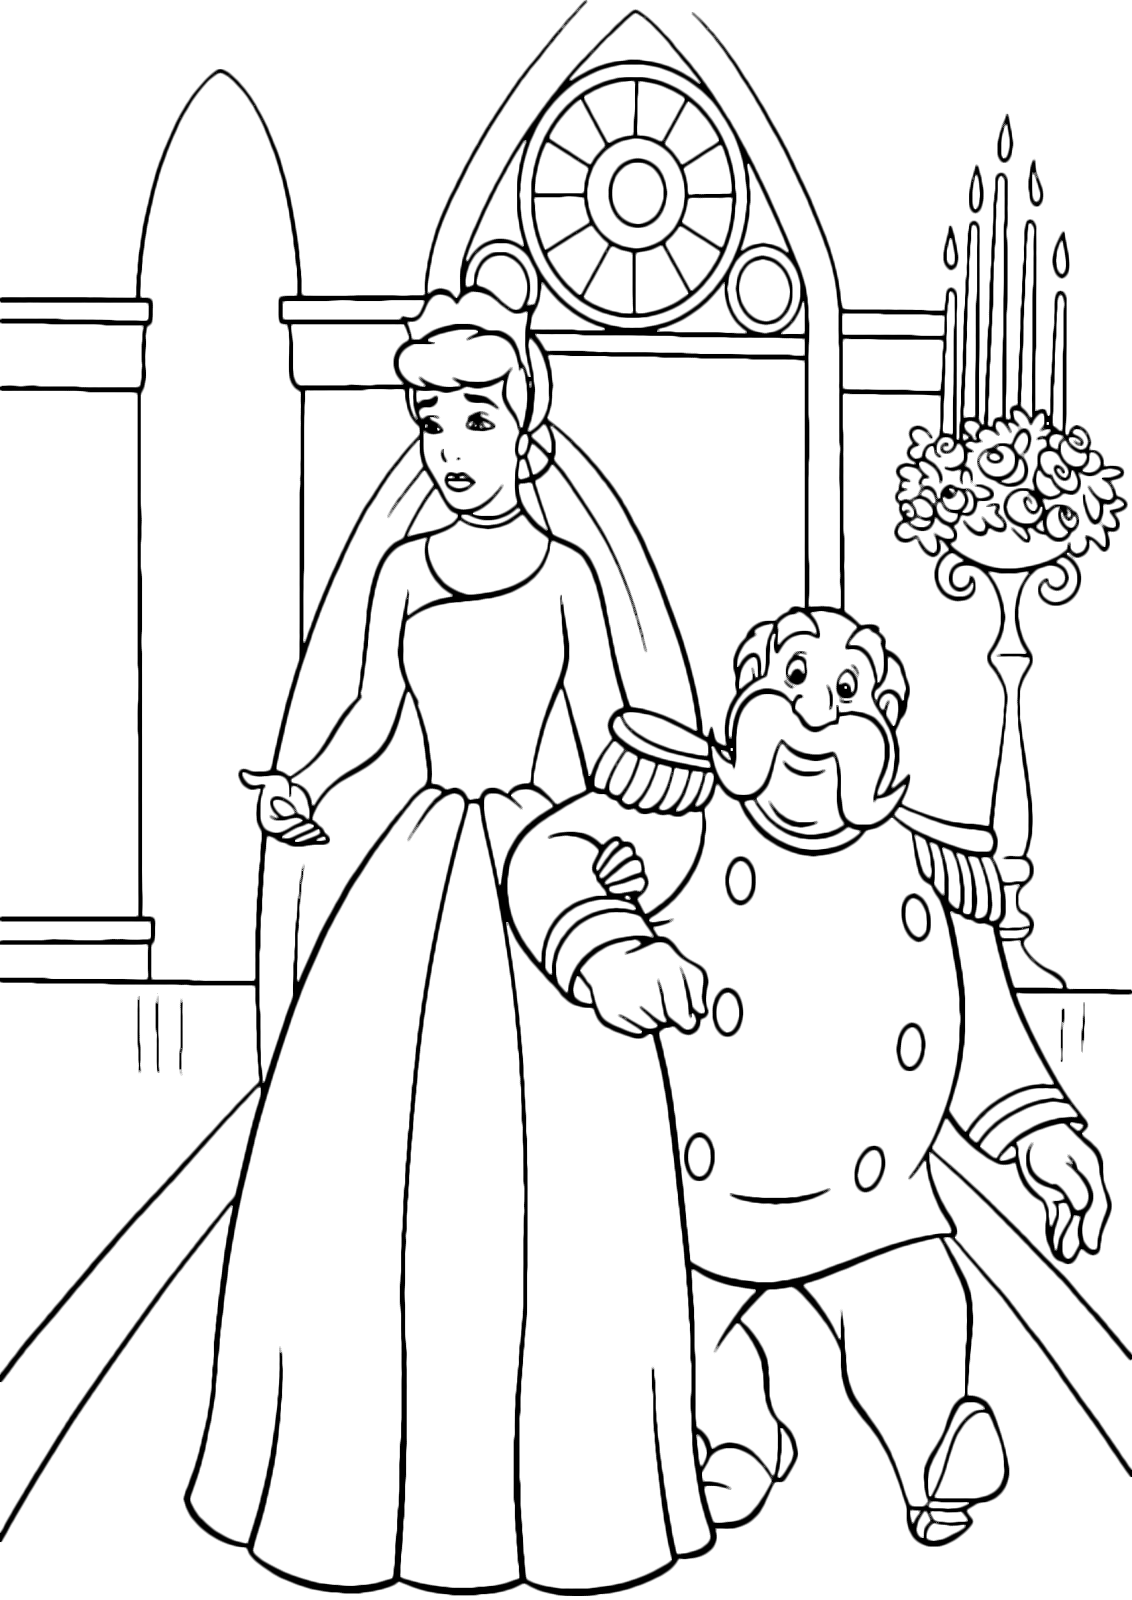 Cinderella - The King accompanies Cinderella to the altar